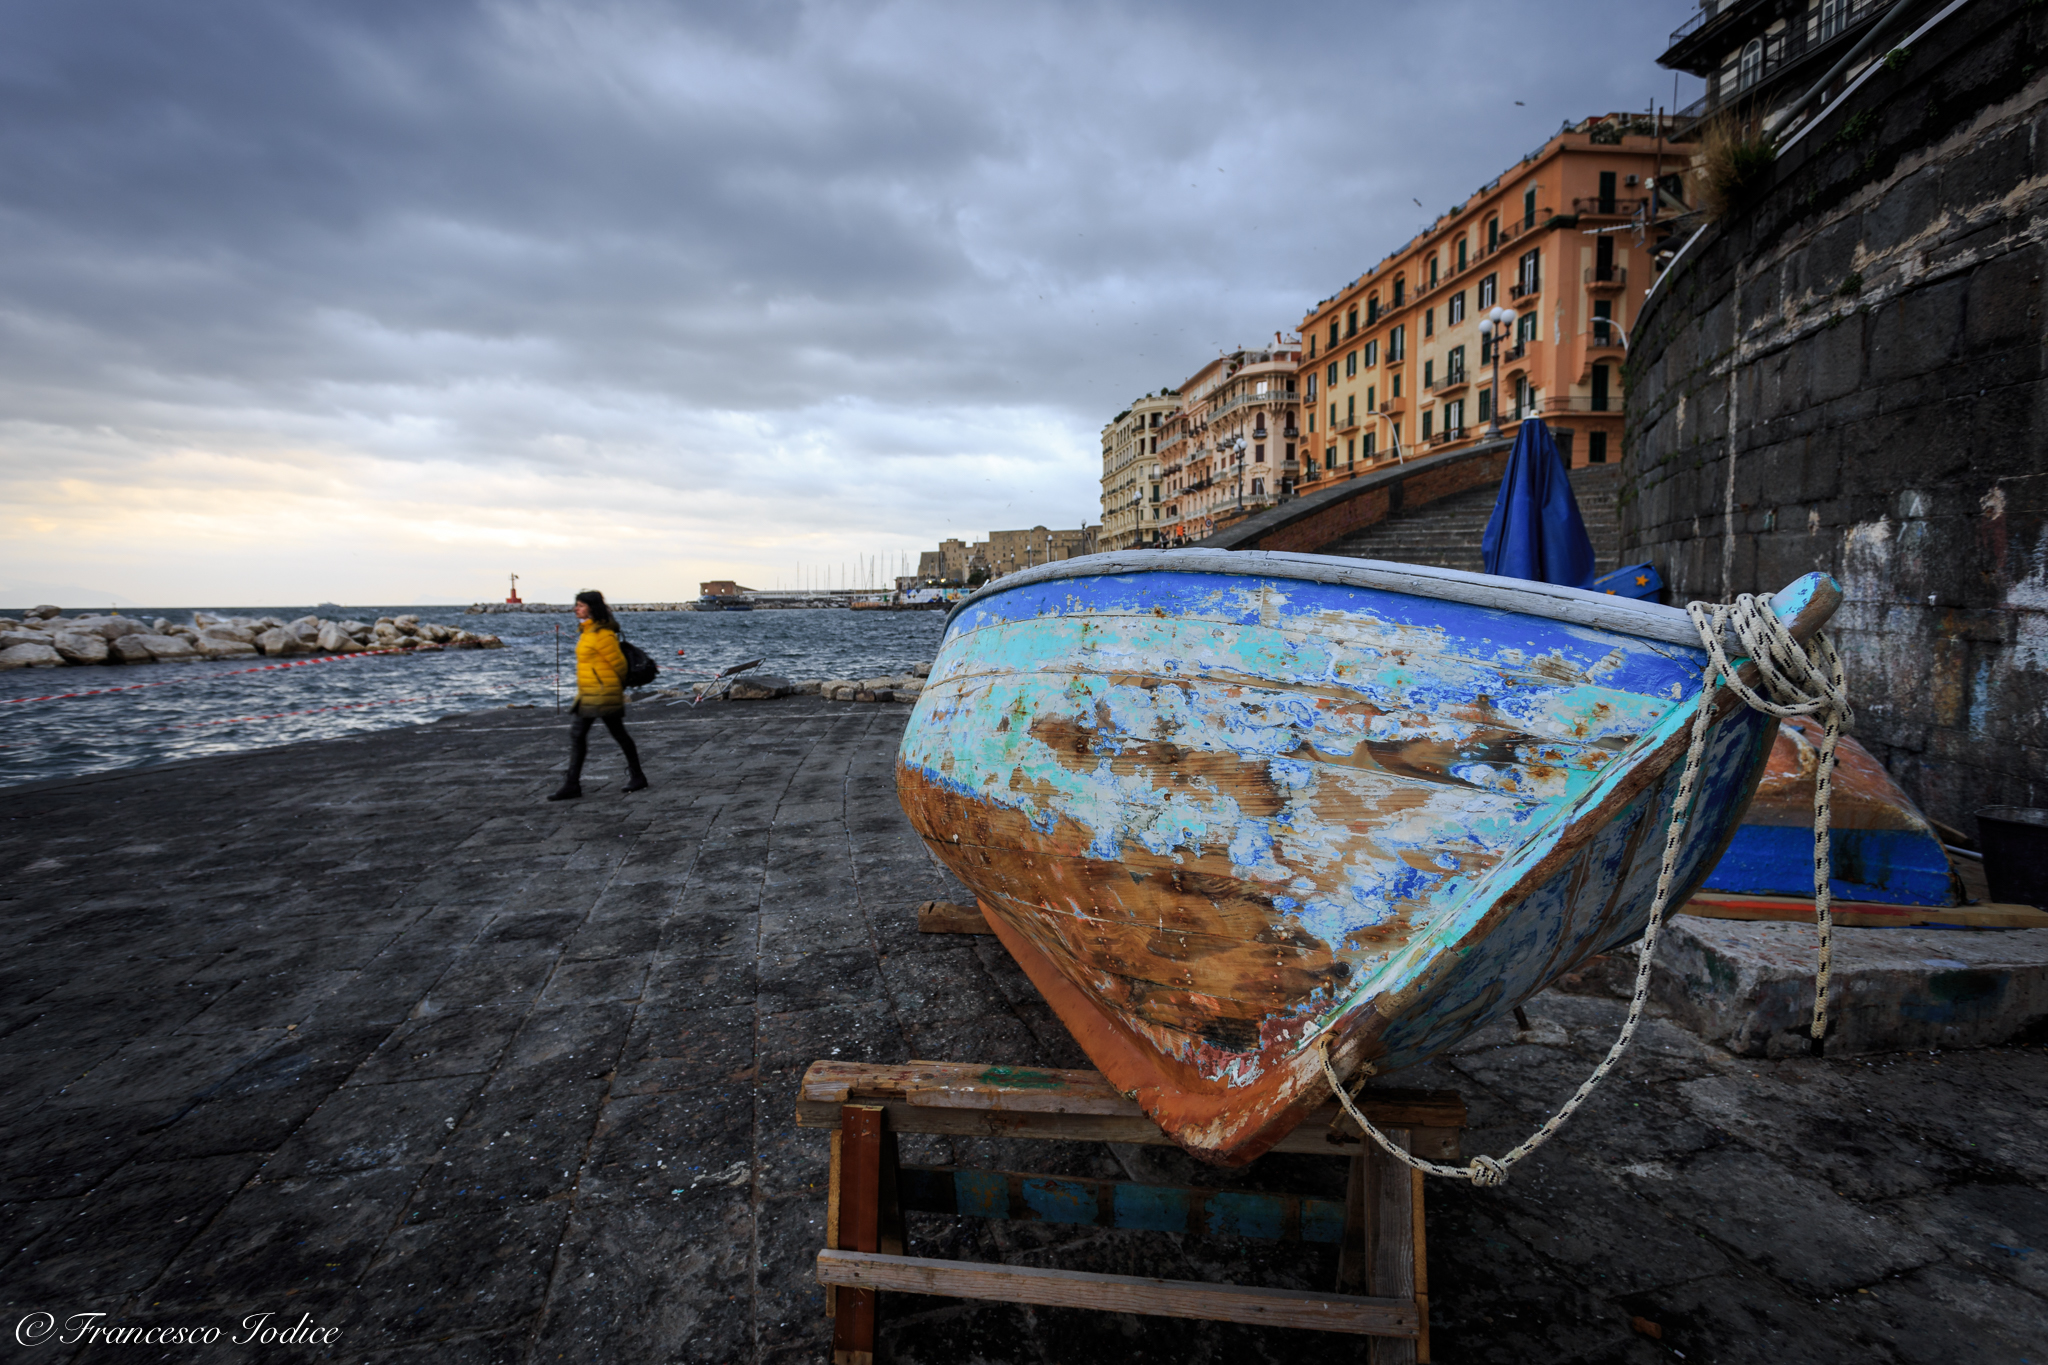 Waterfront, Naples...